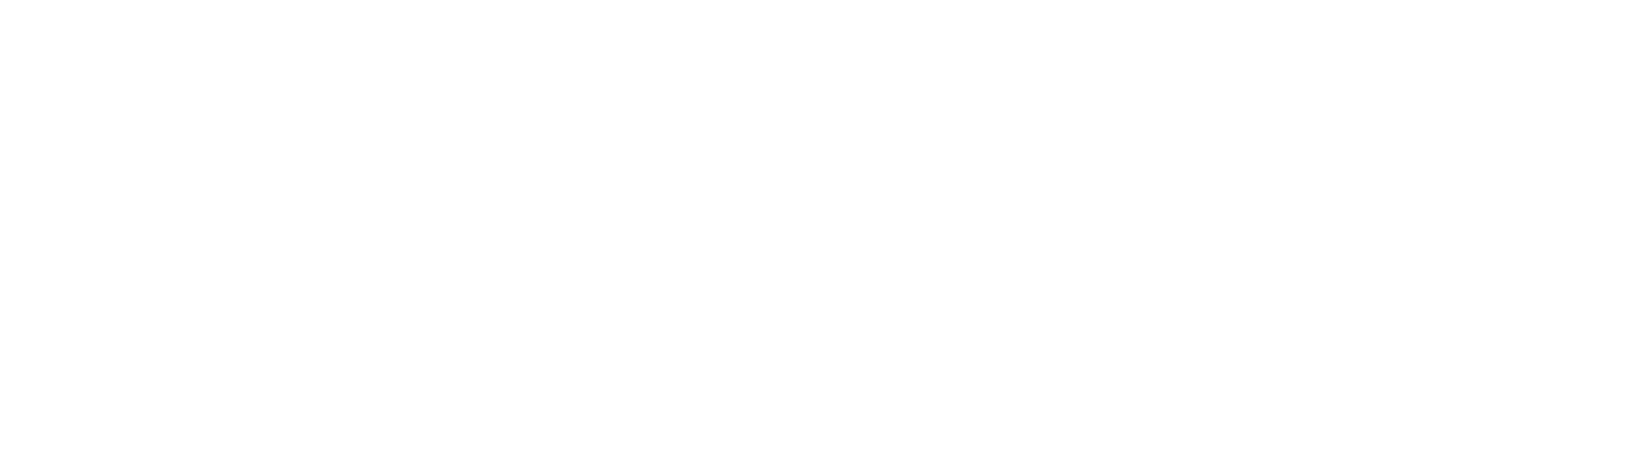 Aryaka-logo-white-02